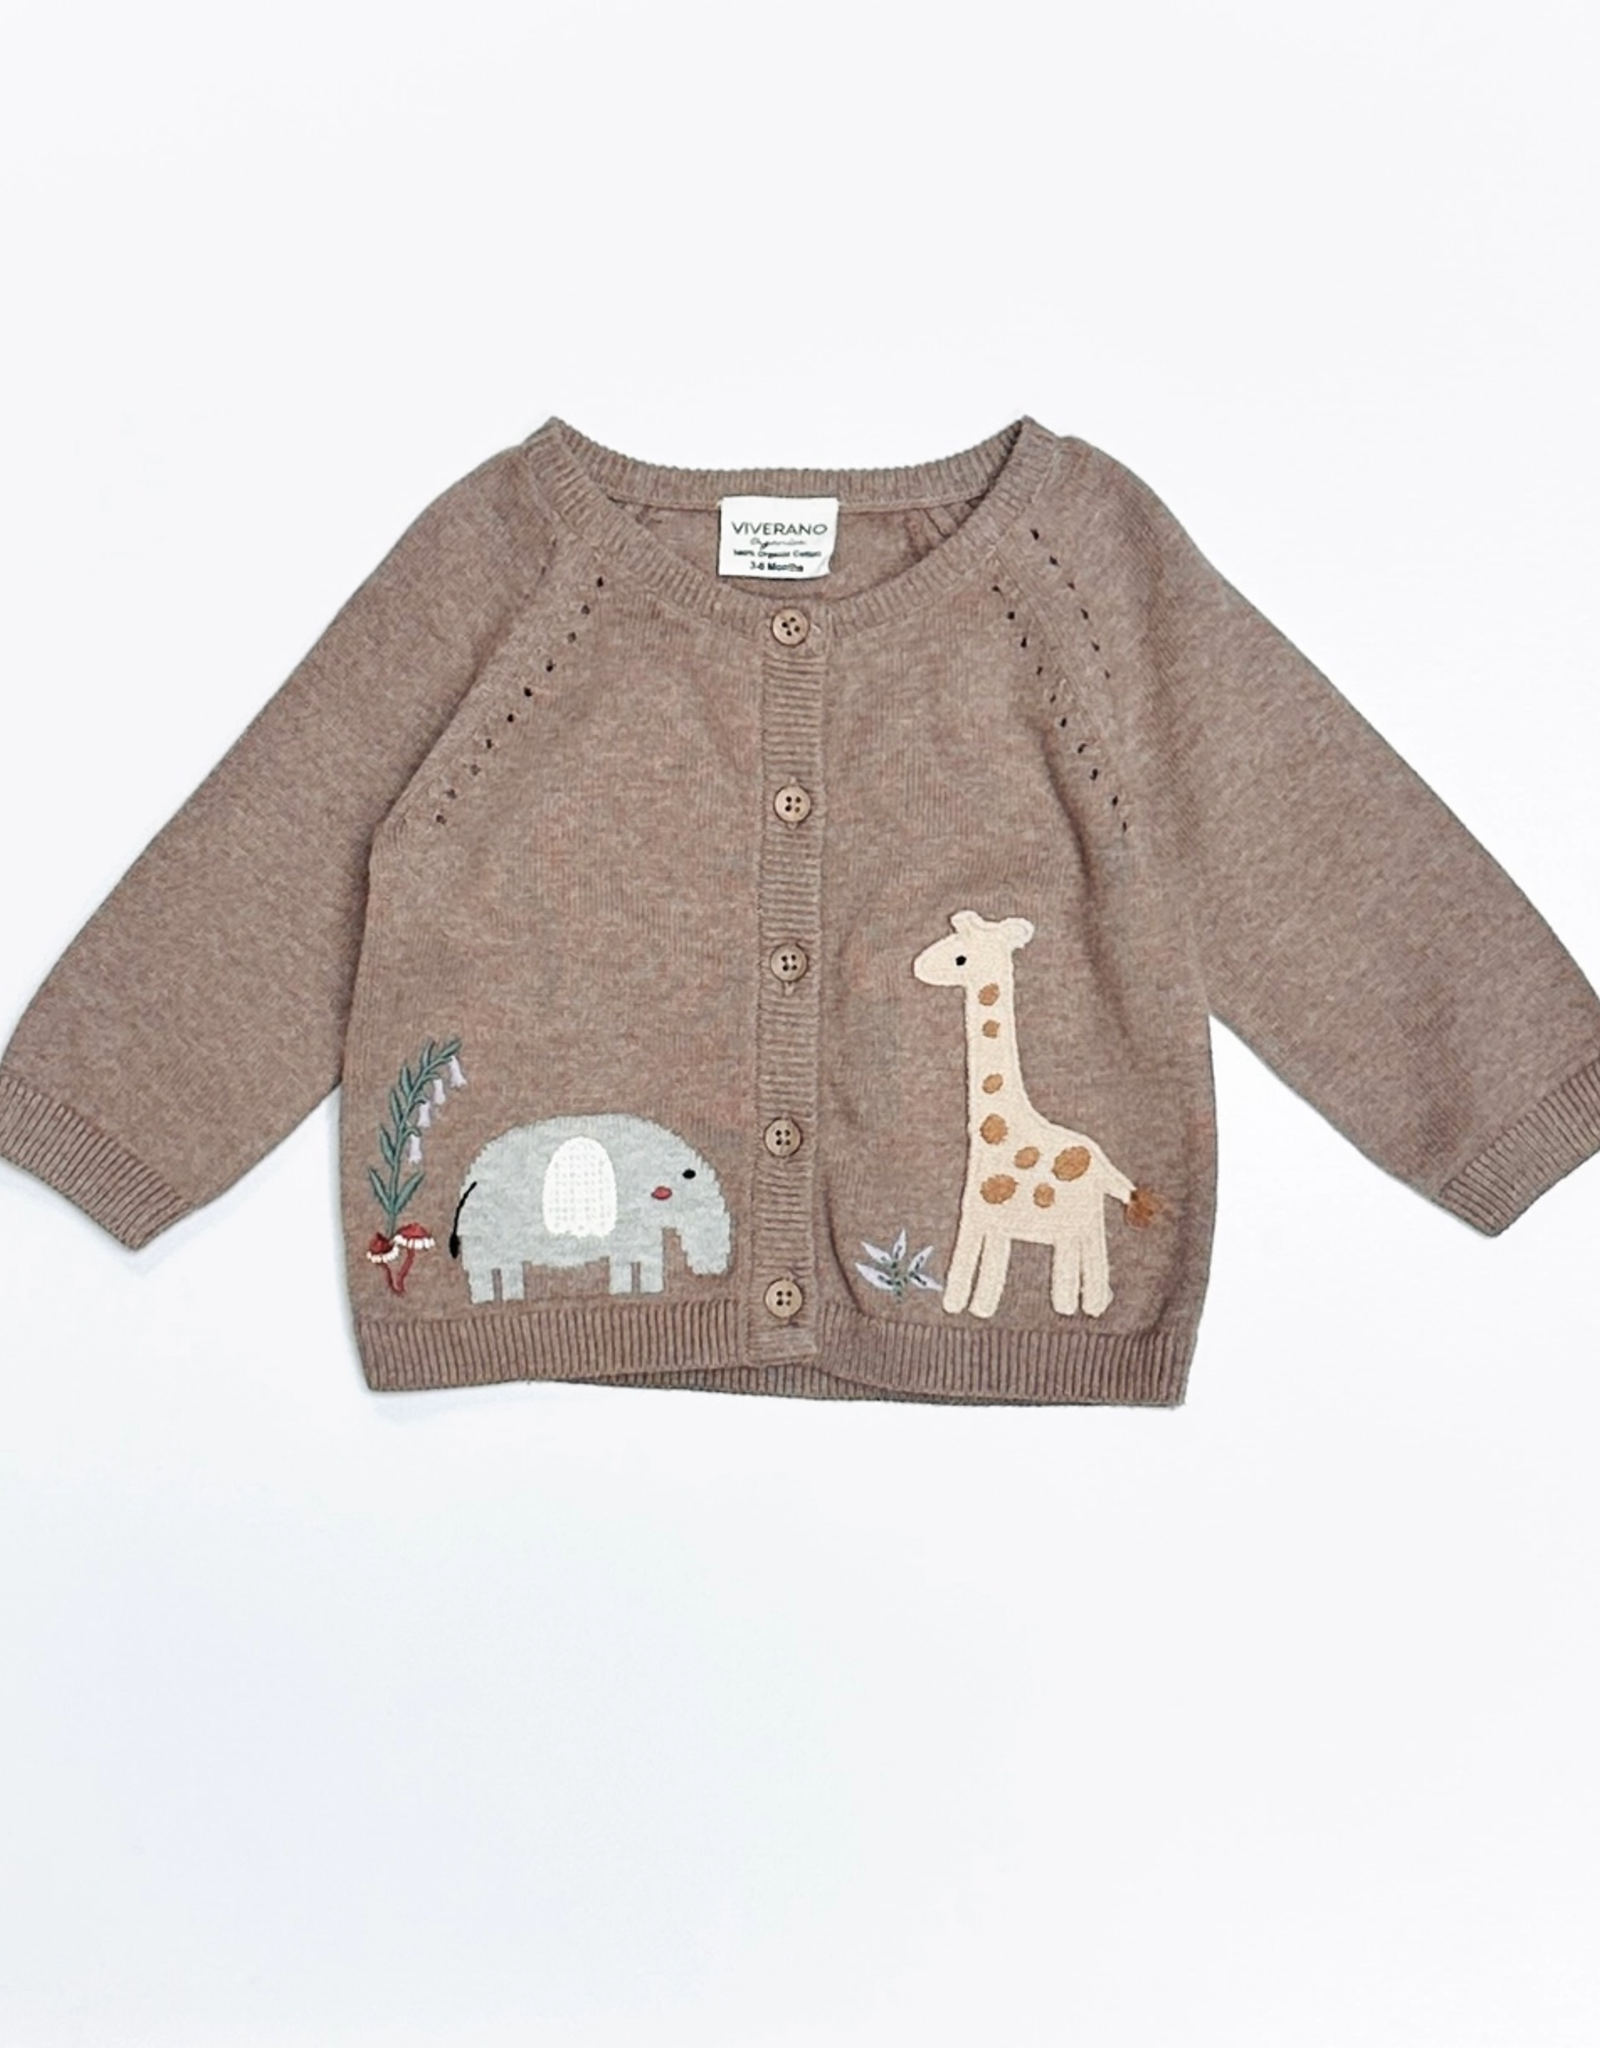 Viverano Elephant Giraffe Pointelle Cardigan Sweater - Cafe Latte